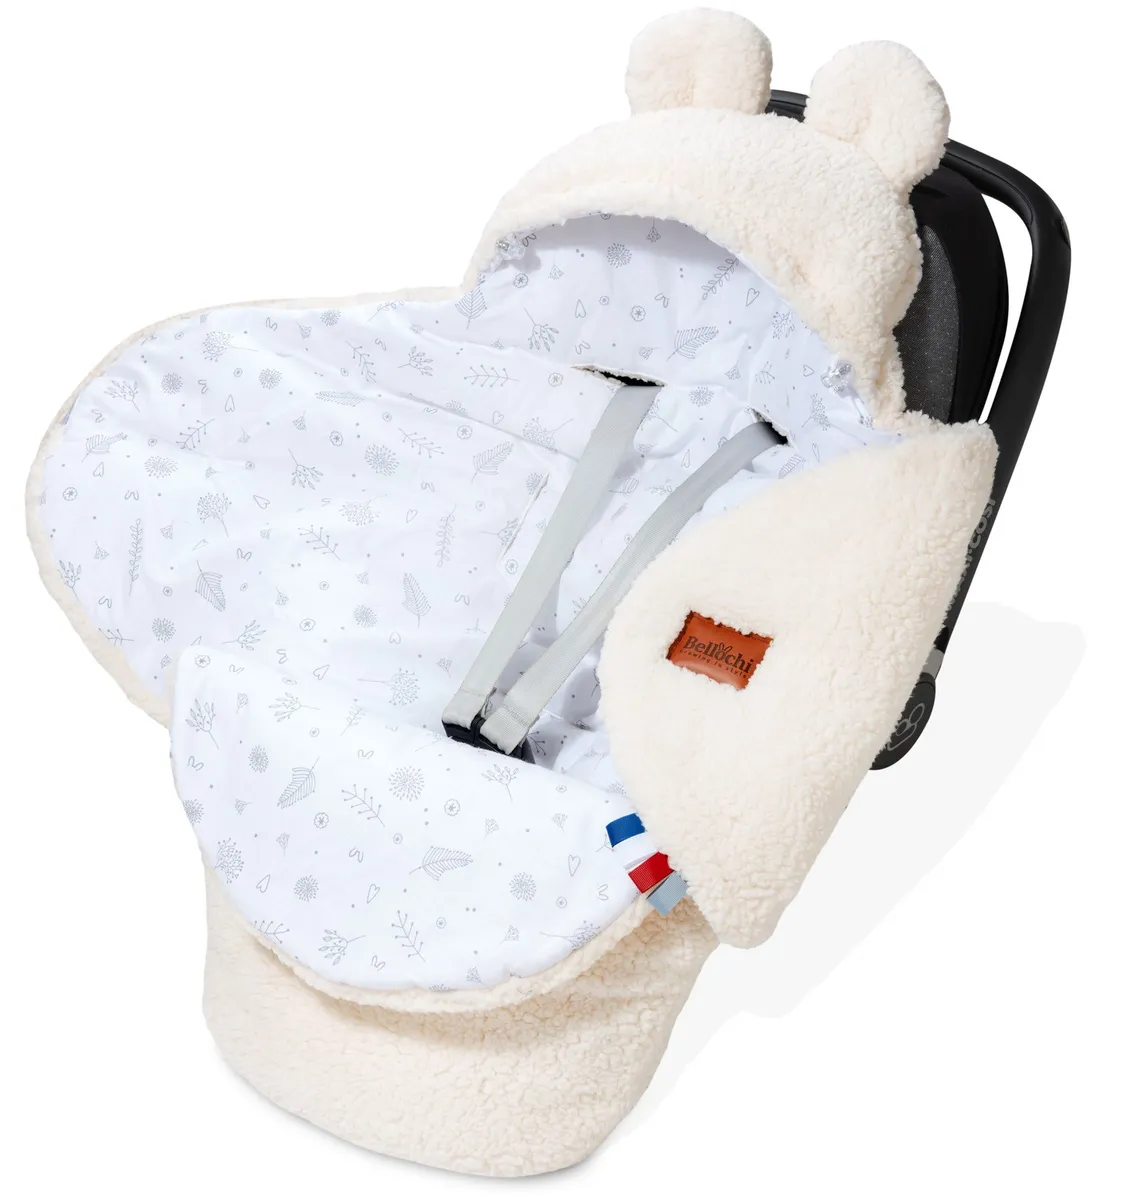 Baby car seat blanket 90×90 cm white Teddy bear